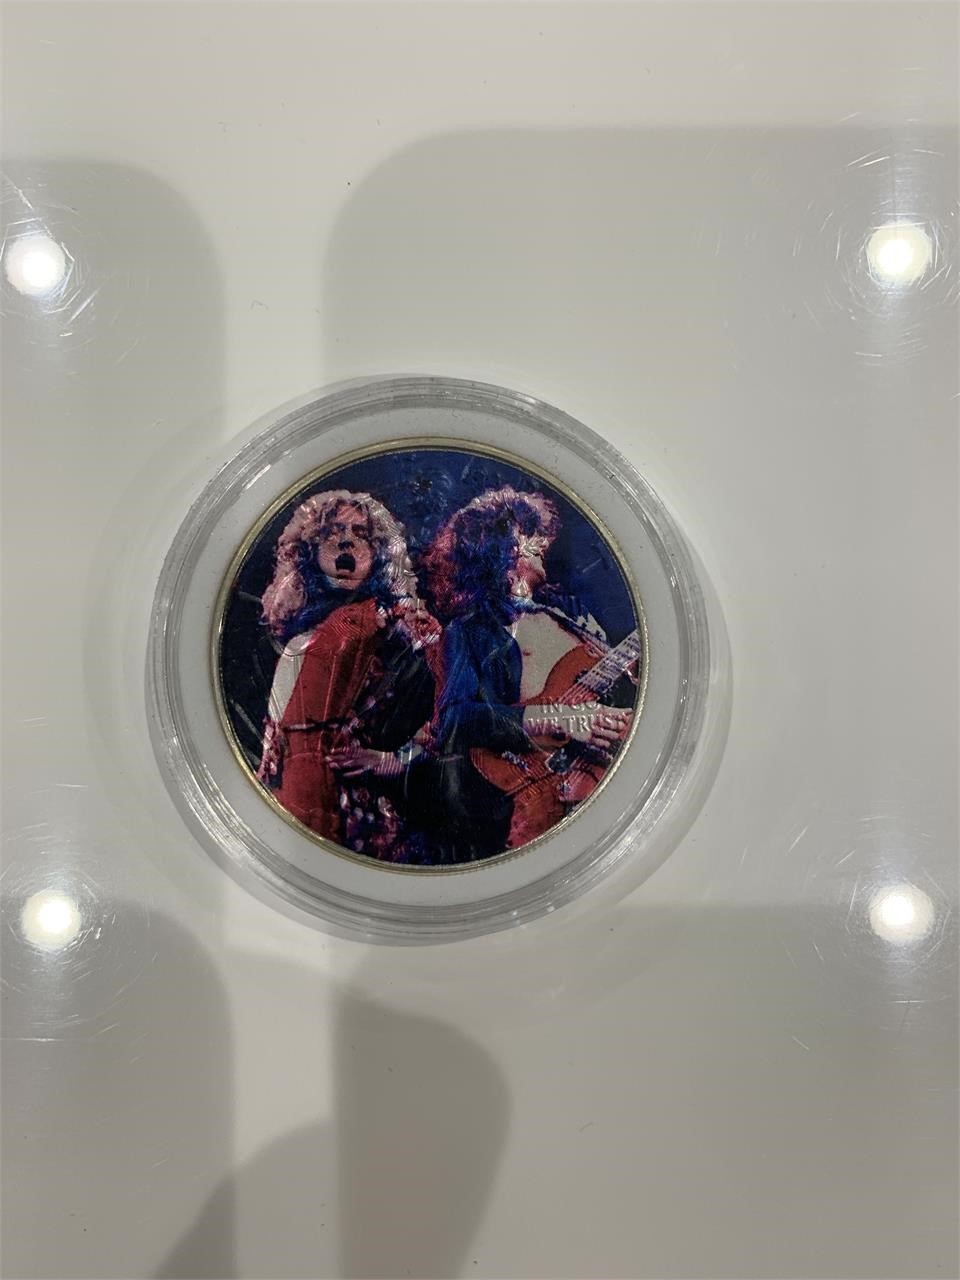 Led Zeppelin silver dollar